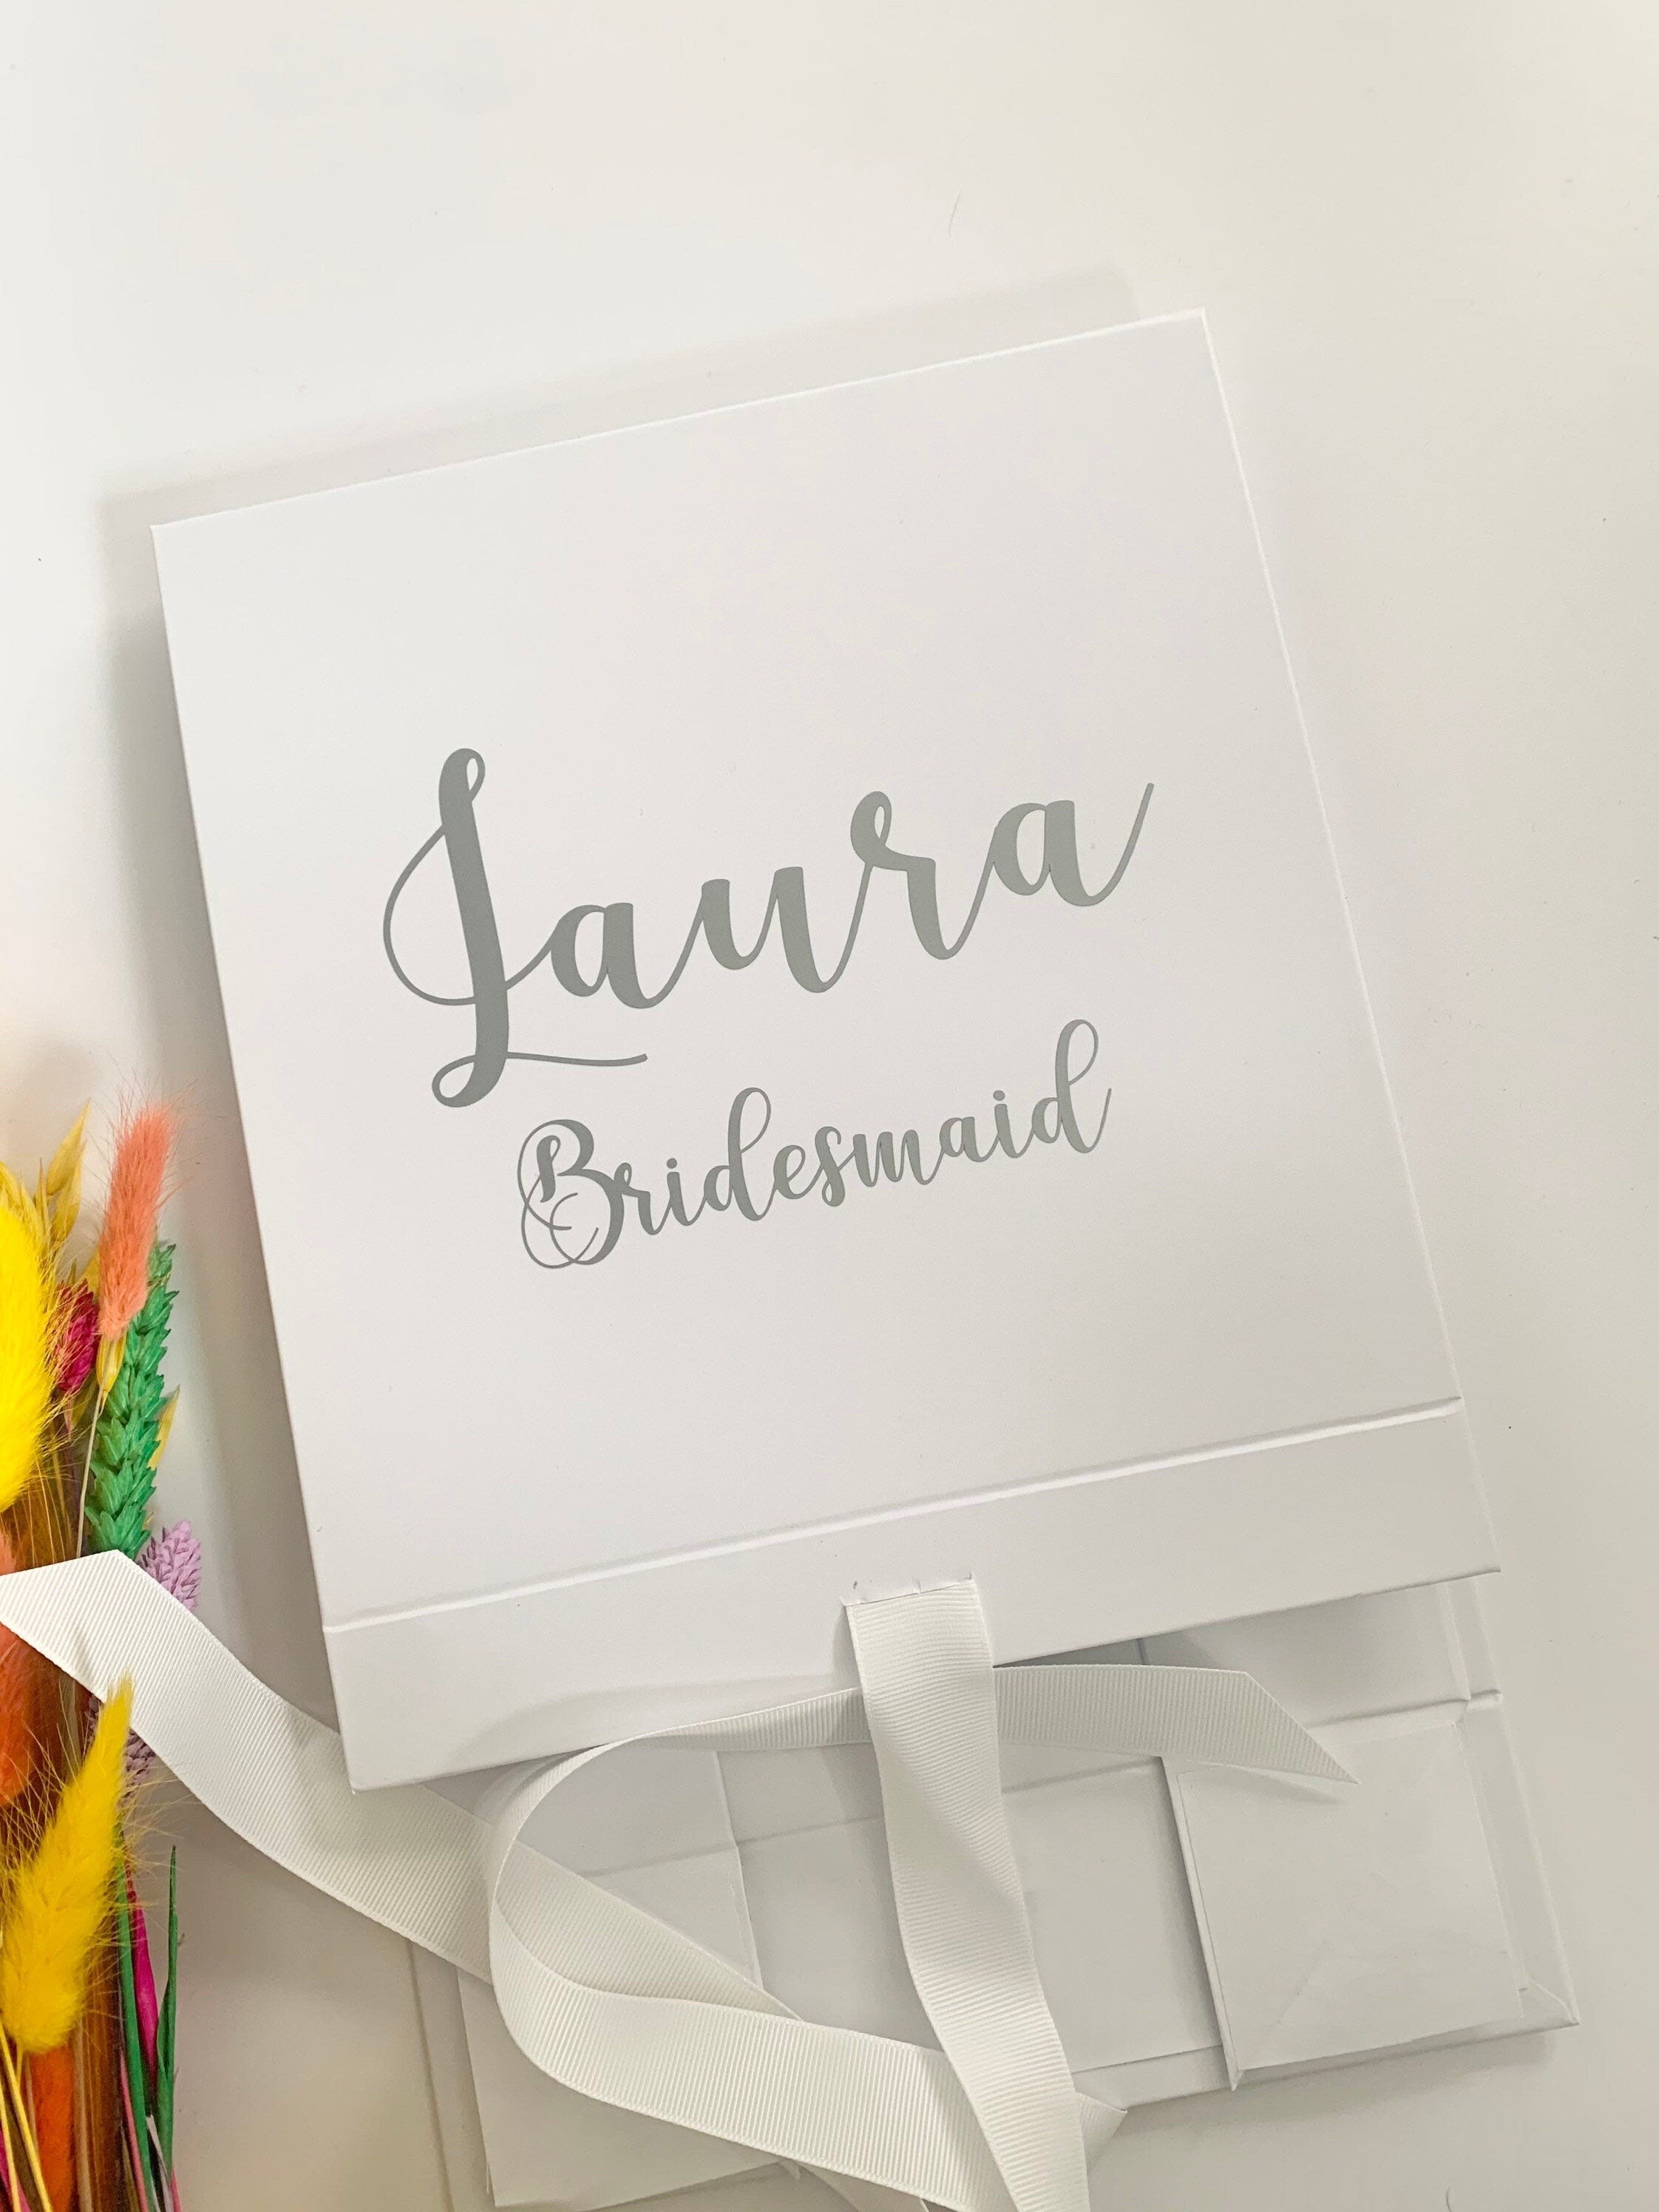 Send Gifts for Bride Online | Buy Gifts for Bride - FNP